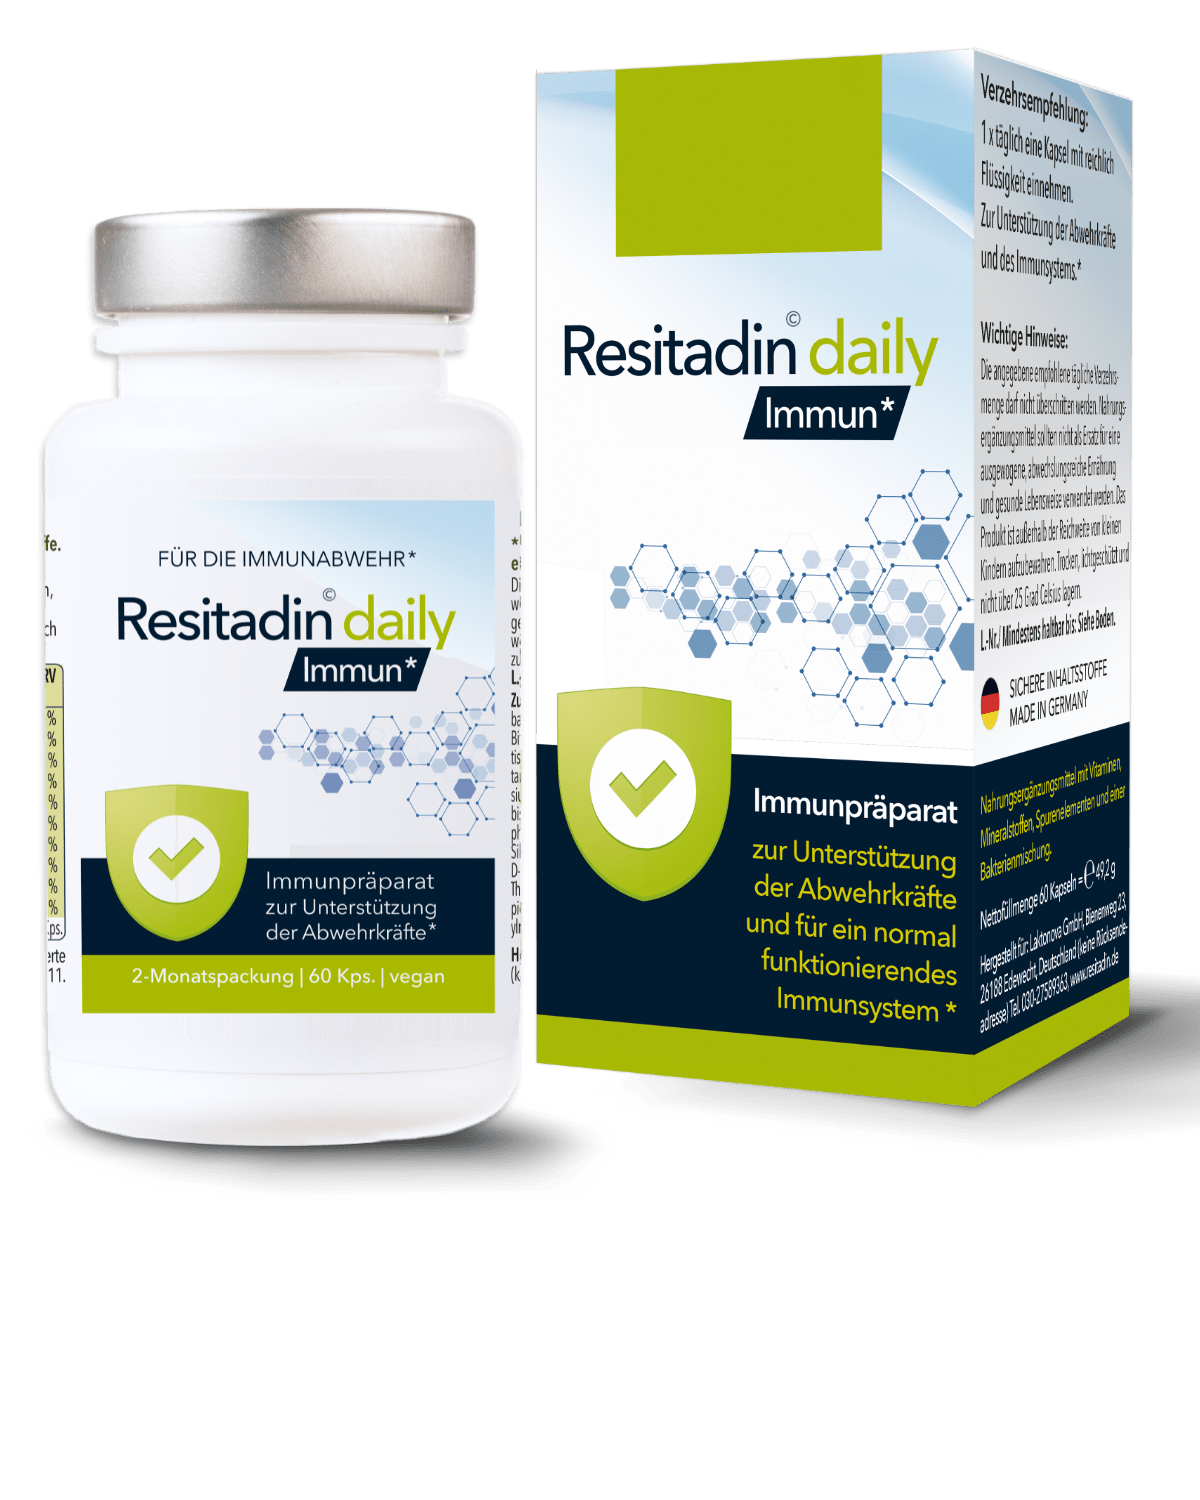 Resitadin daily Immun